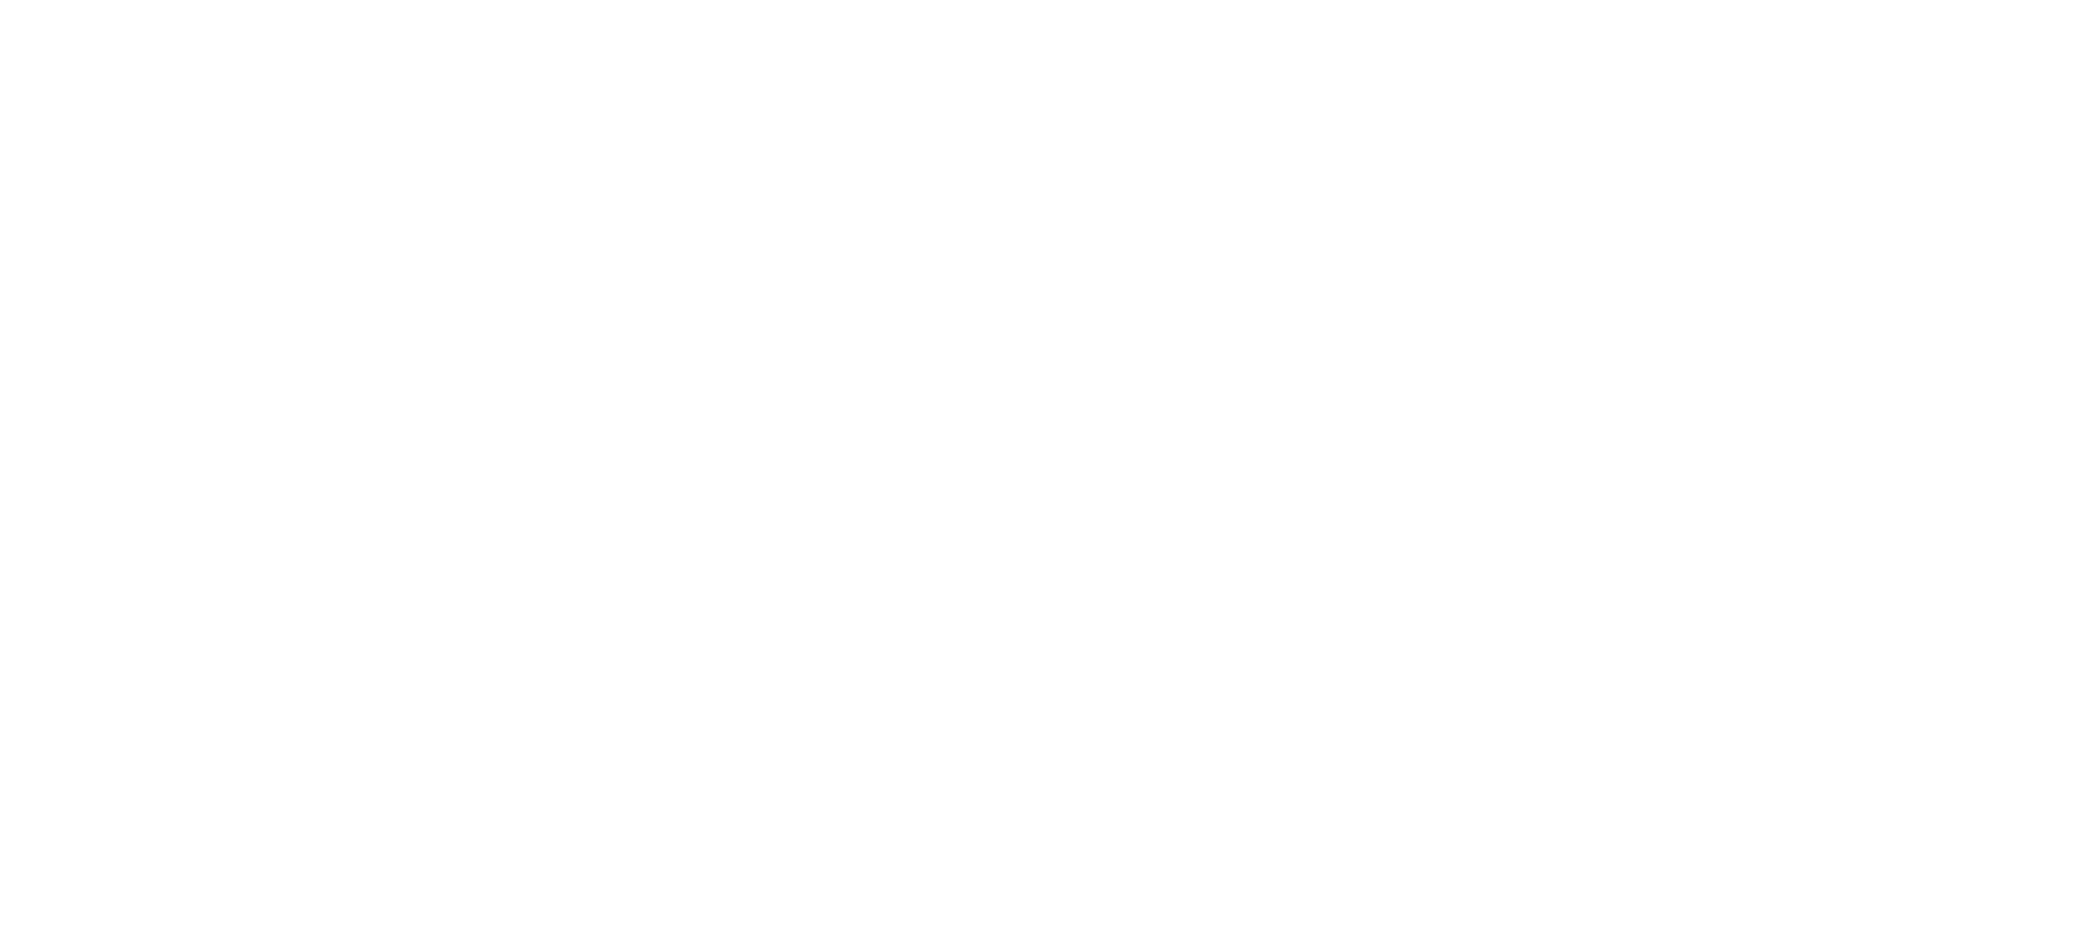 COFFEE-SHOP-TAJIMAYA